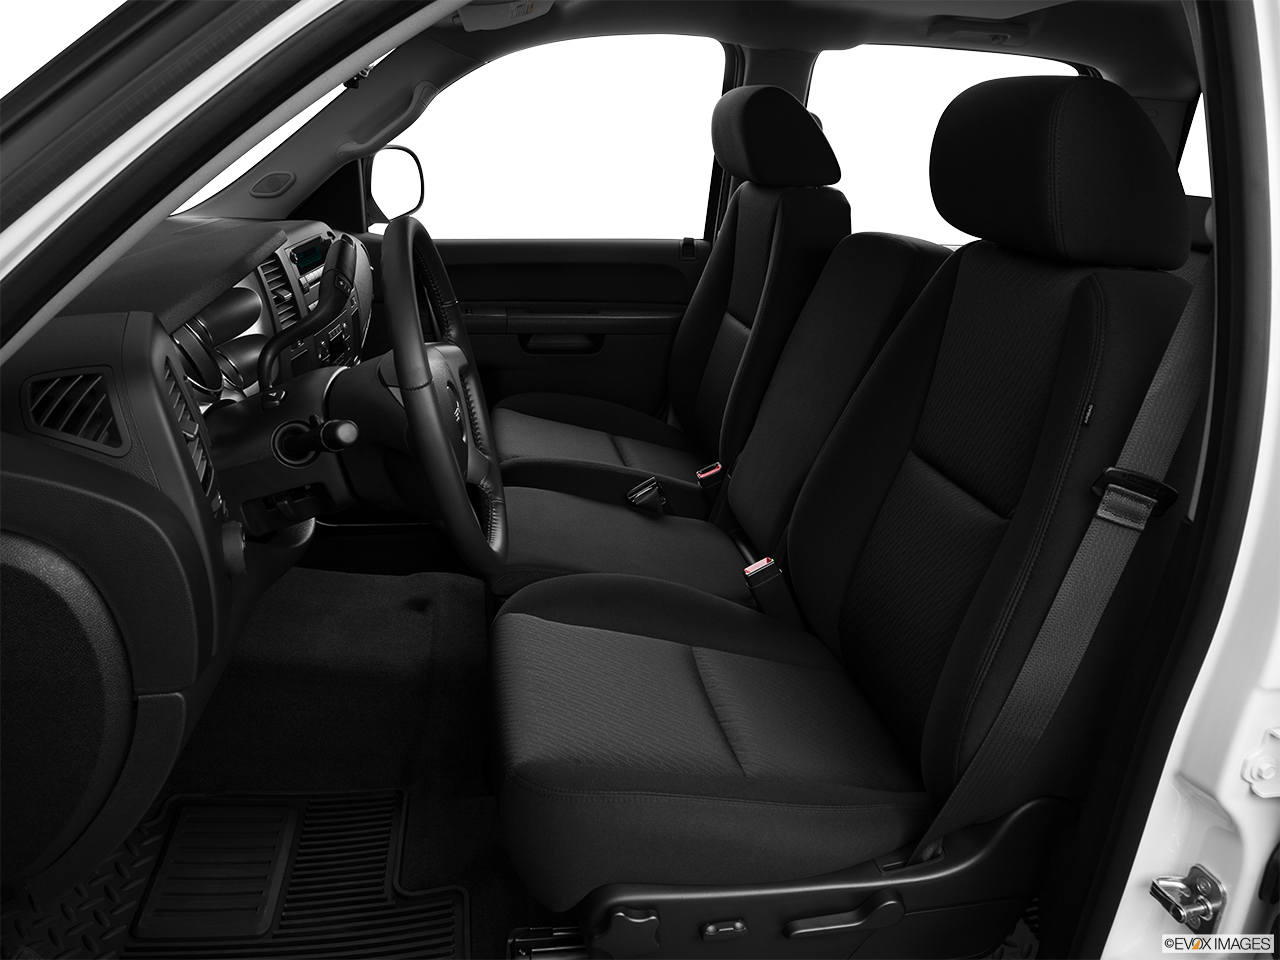 2013 GMC Sierra 1500 Hybrid 3HA Interior Bonus Shots (no set spec) 